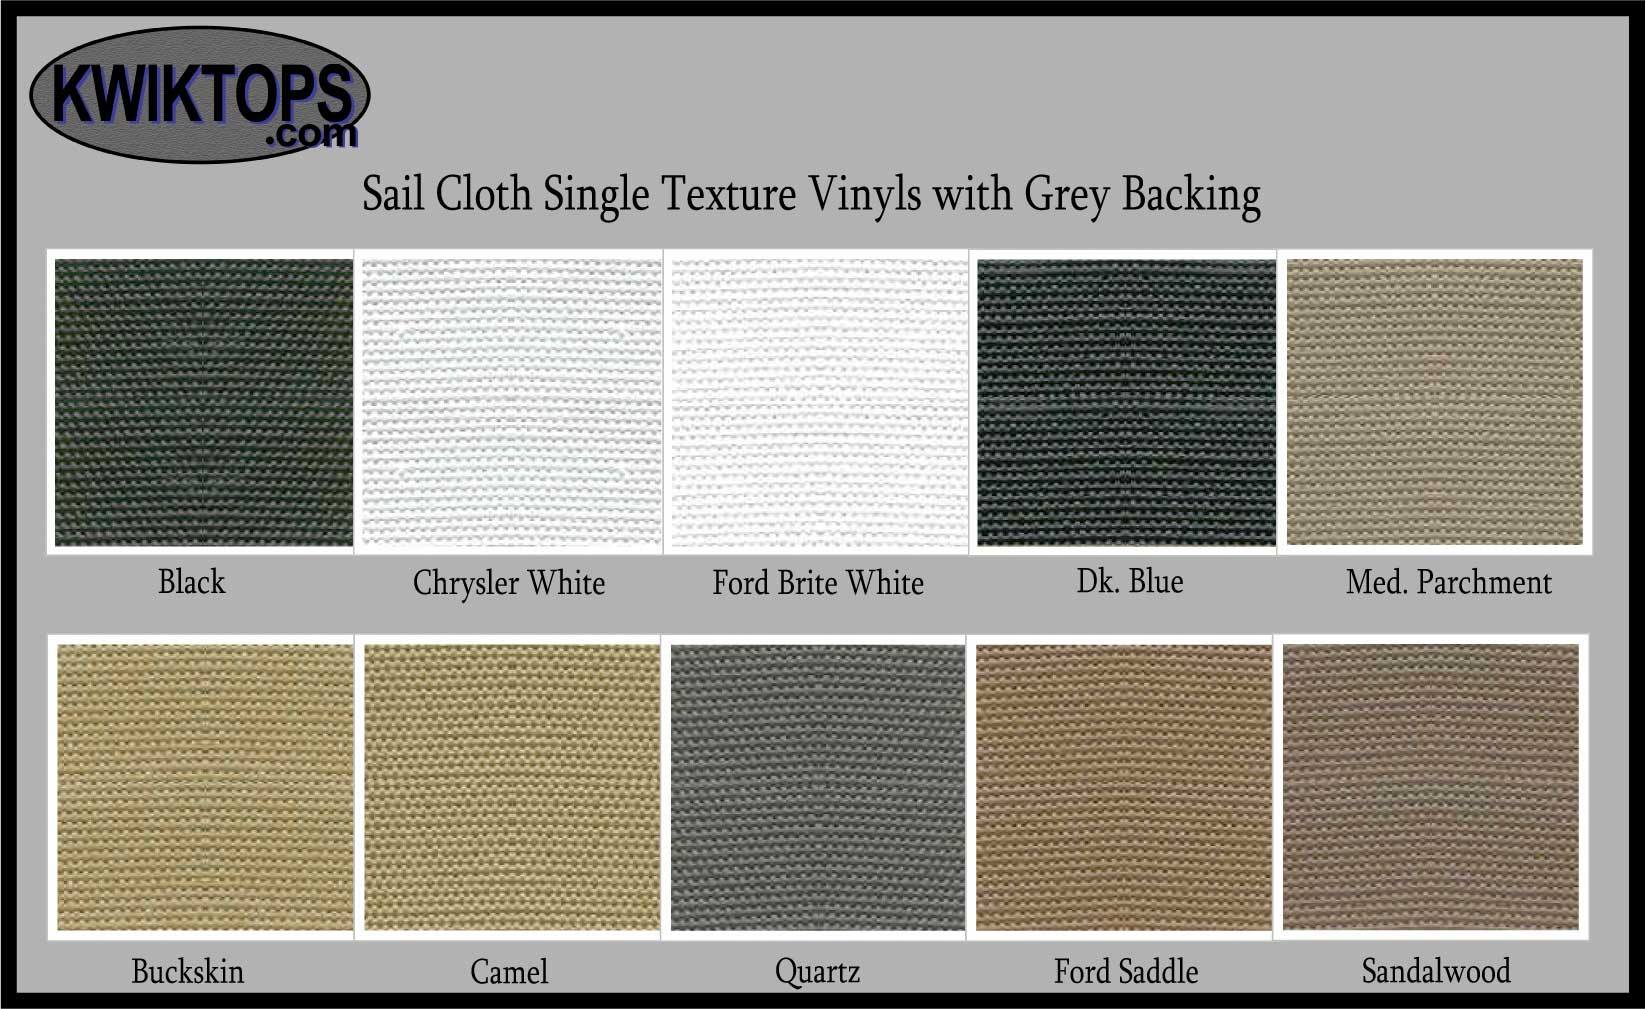 Ez-On Sail Cloth Single Texture Vinyl Top Material